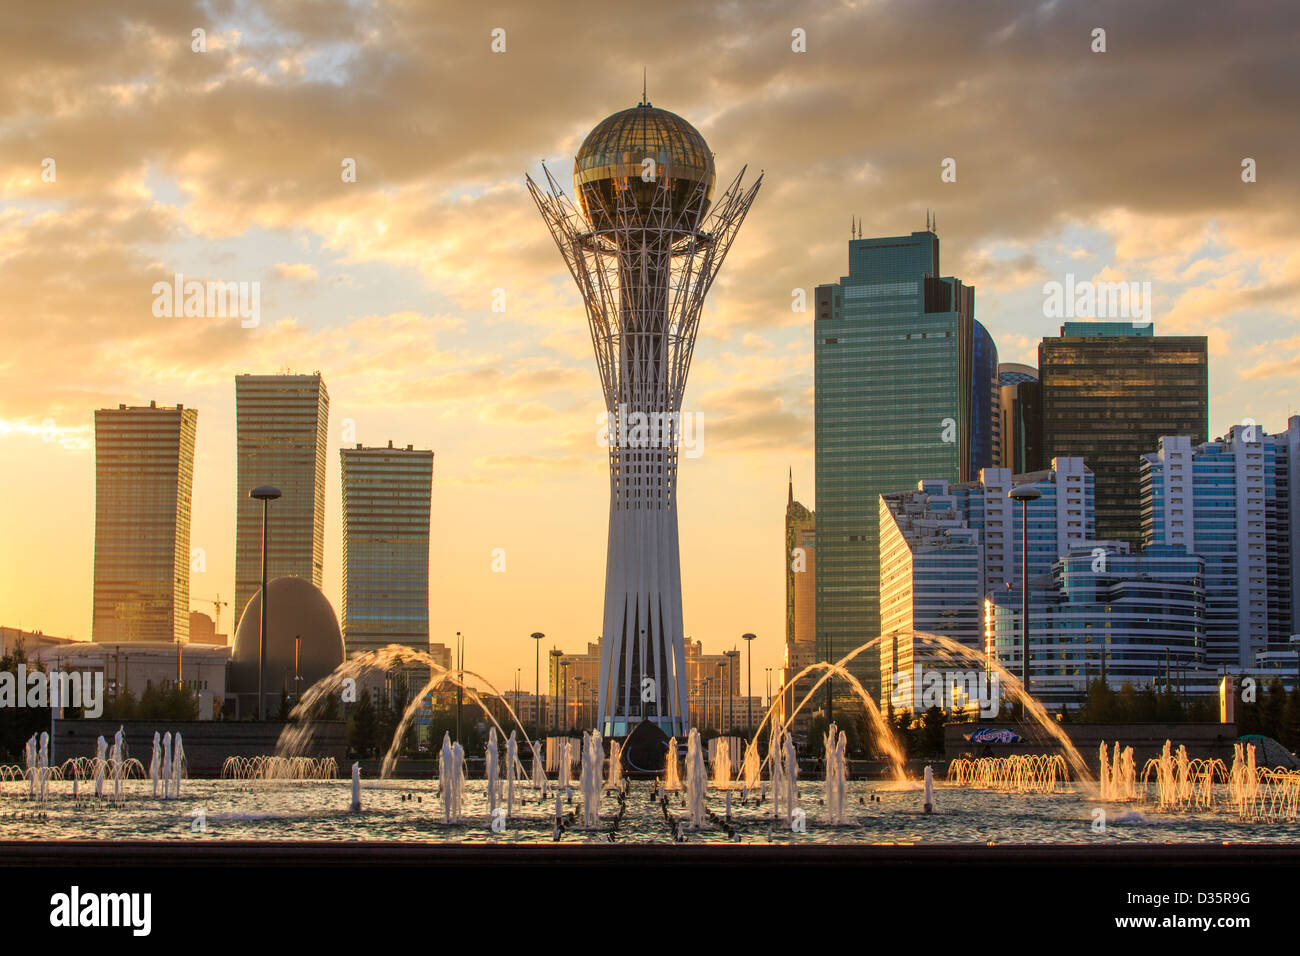 Baiterek tower, the national monument of Kazakhstan, in the nation's capital, Astana Stock Photo